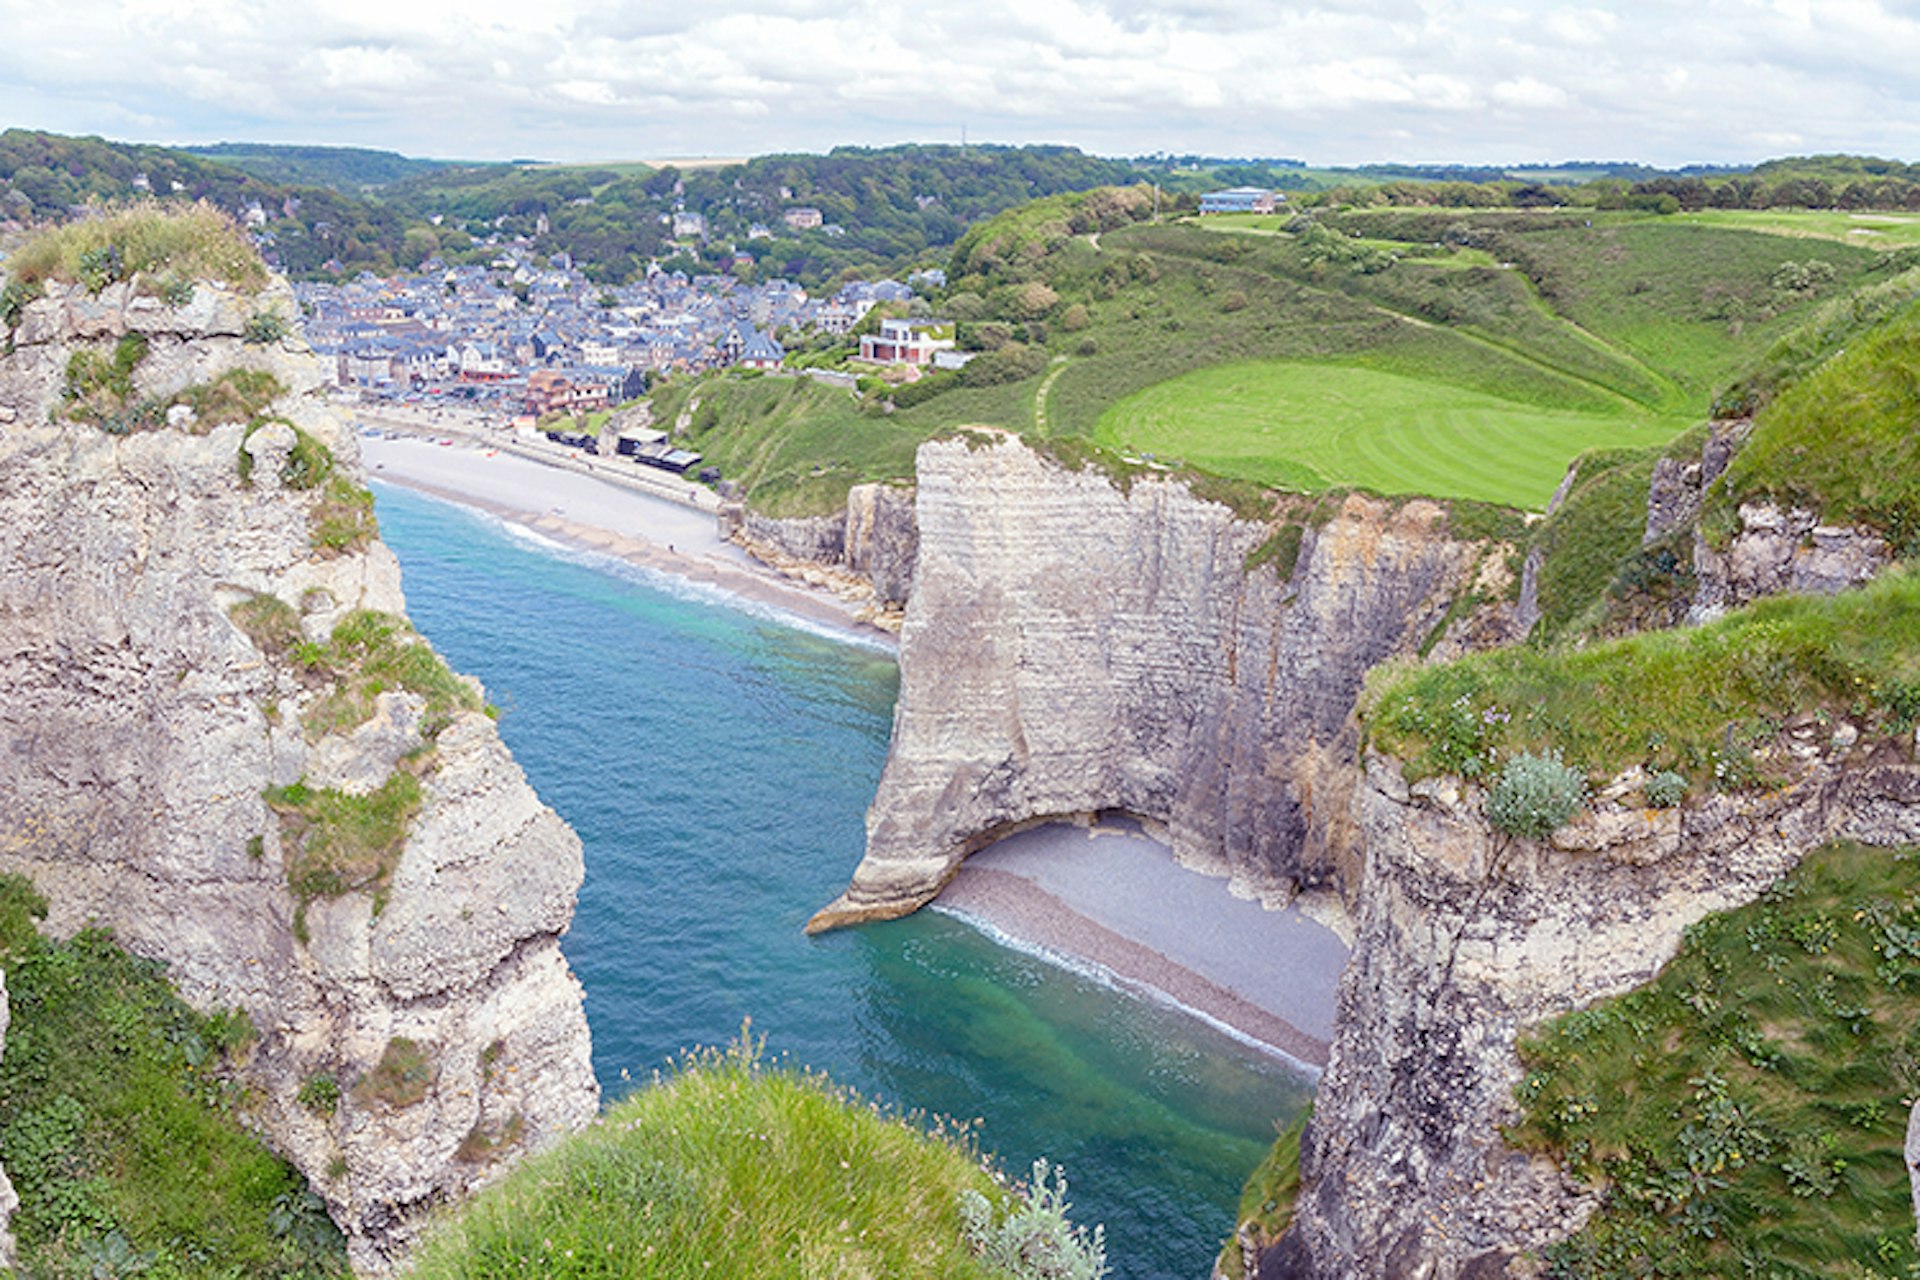 Normandy's coastline has plenty of family-friendly stops. Image by JaySi / Shutterstock